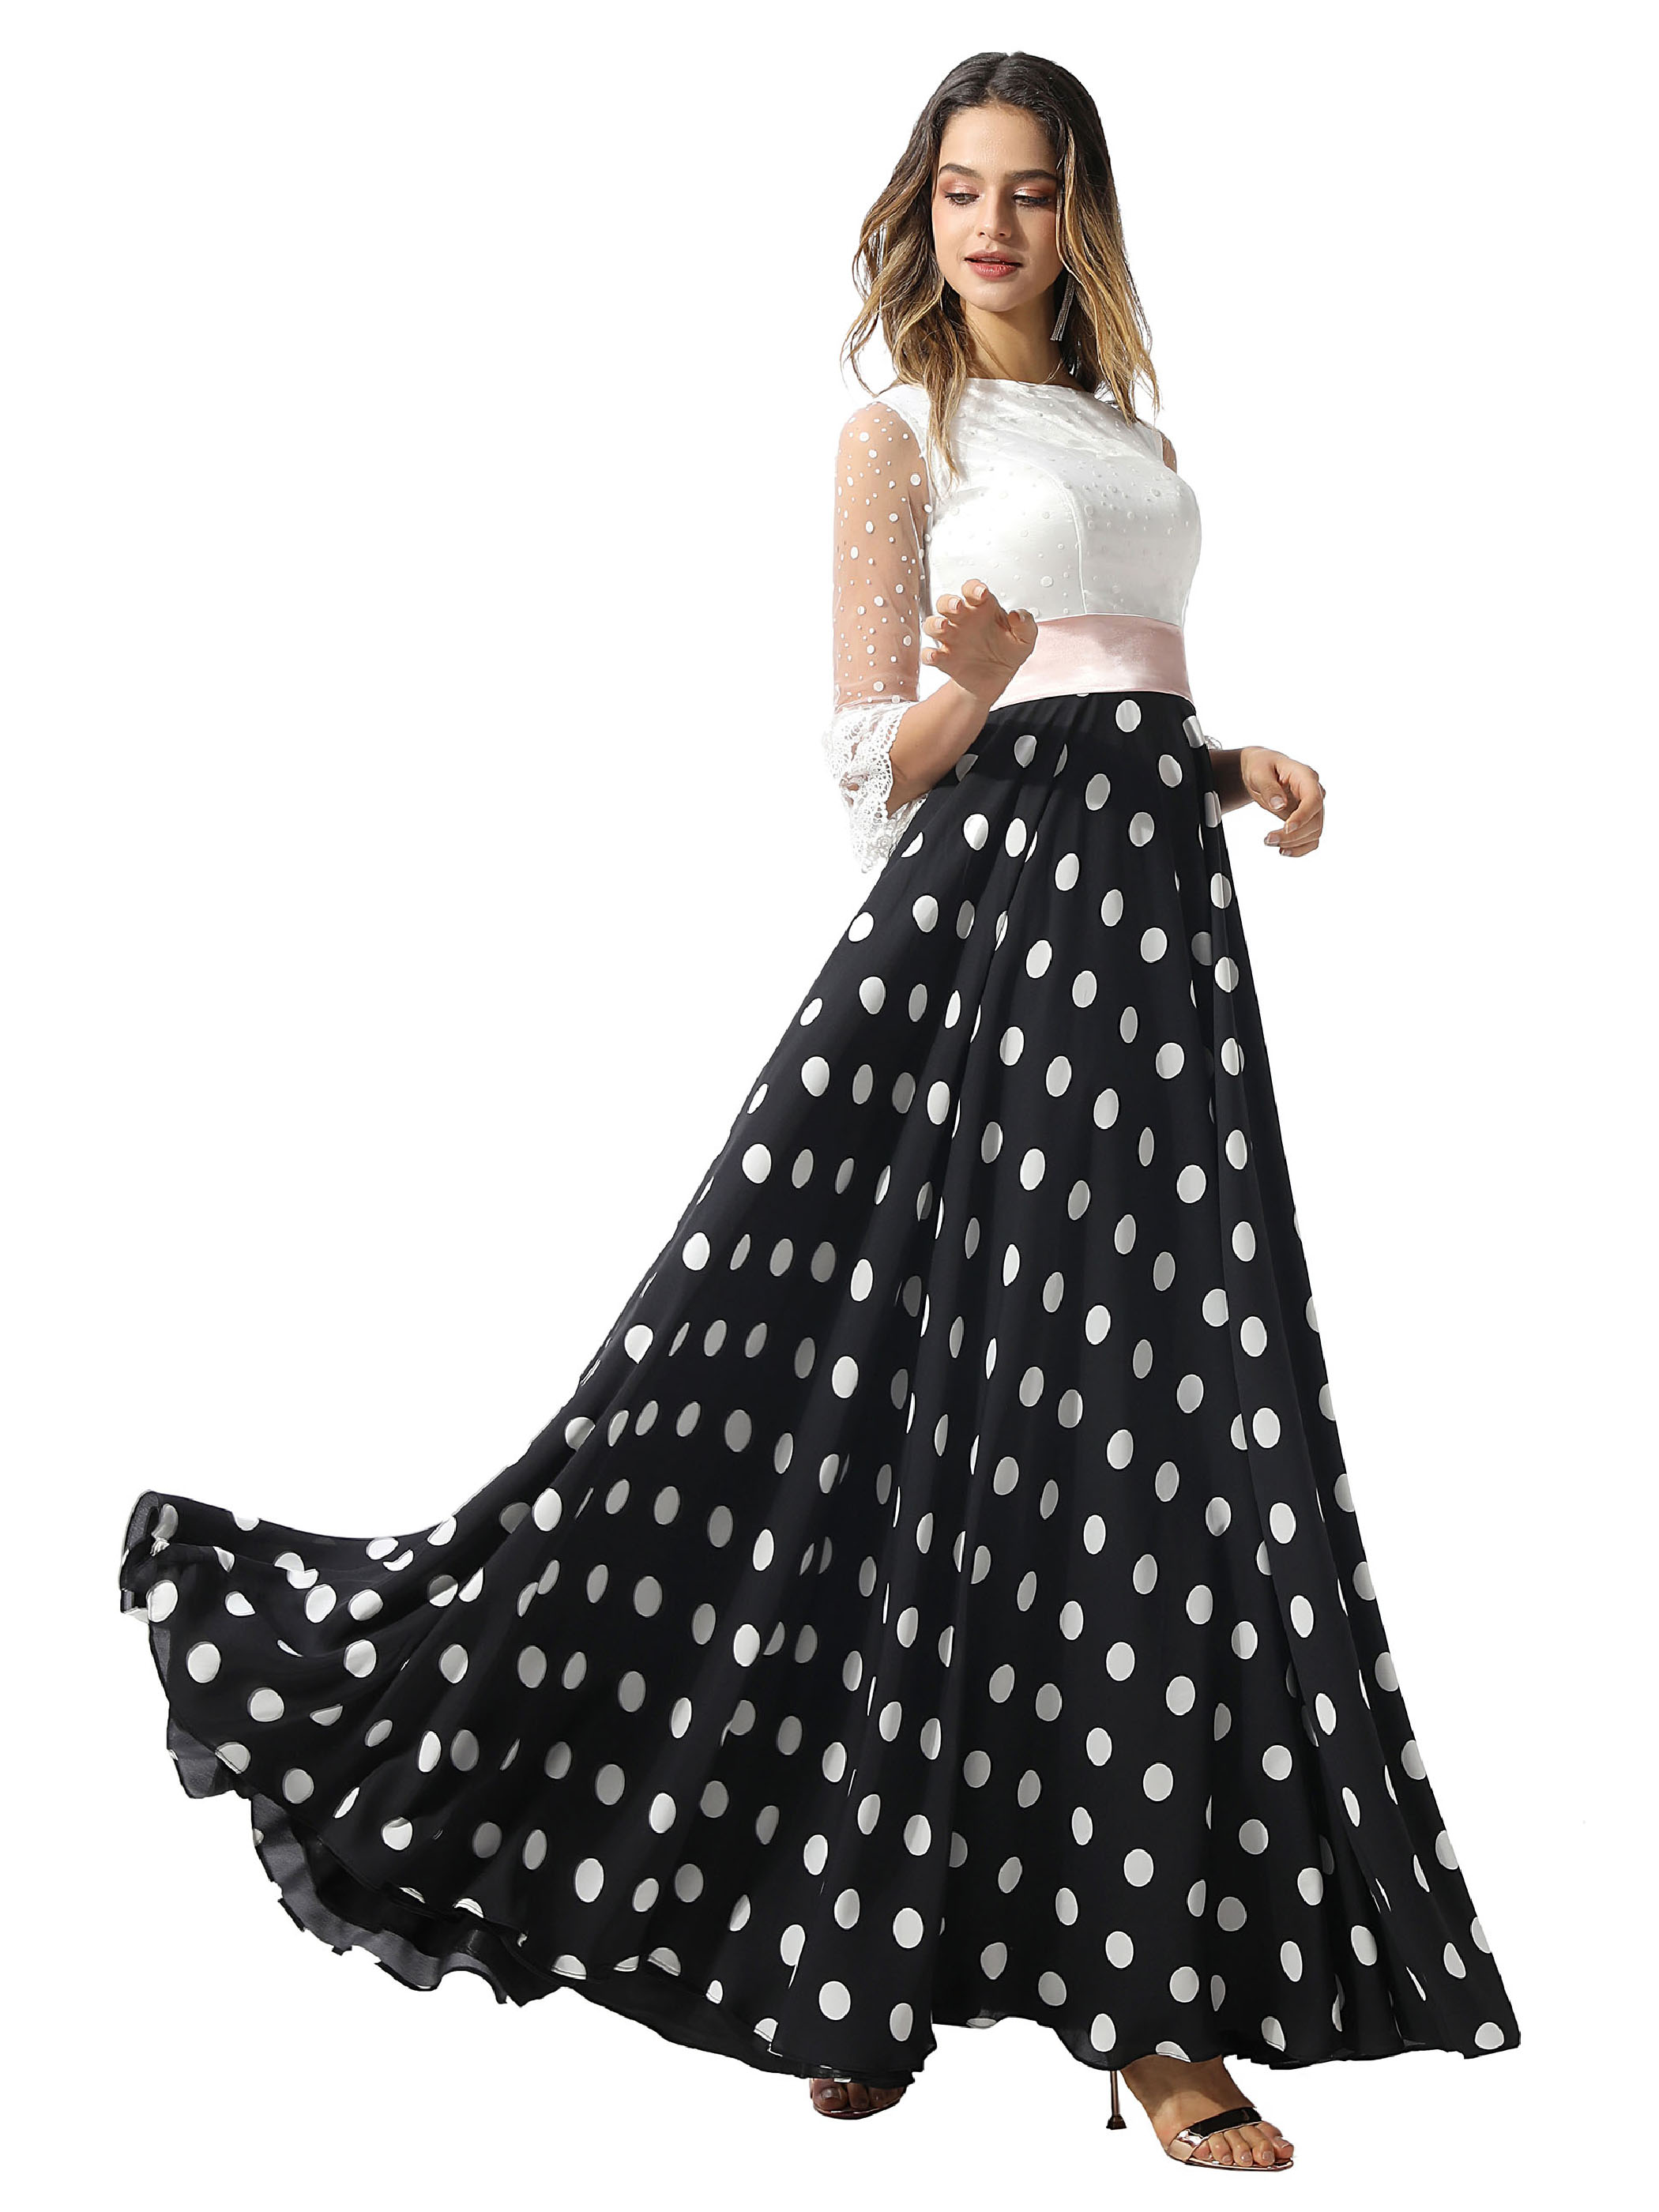 Ericdress Half Sleeves A-Line Floor-Length Print Prom Dress